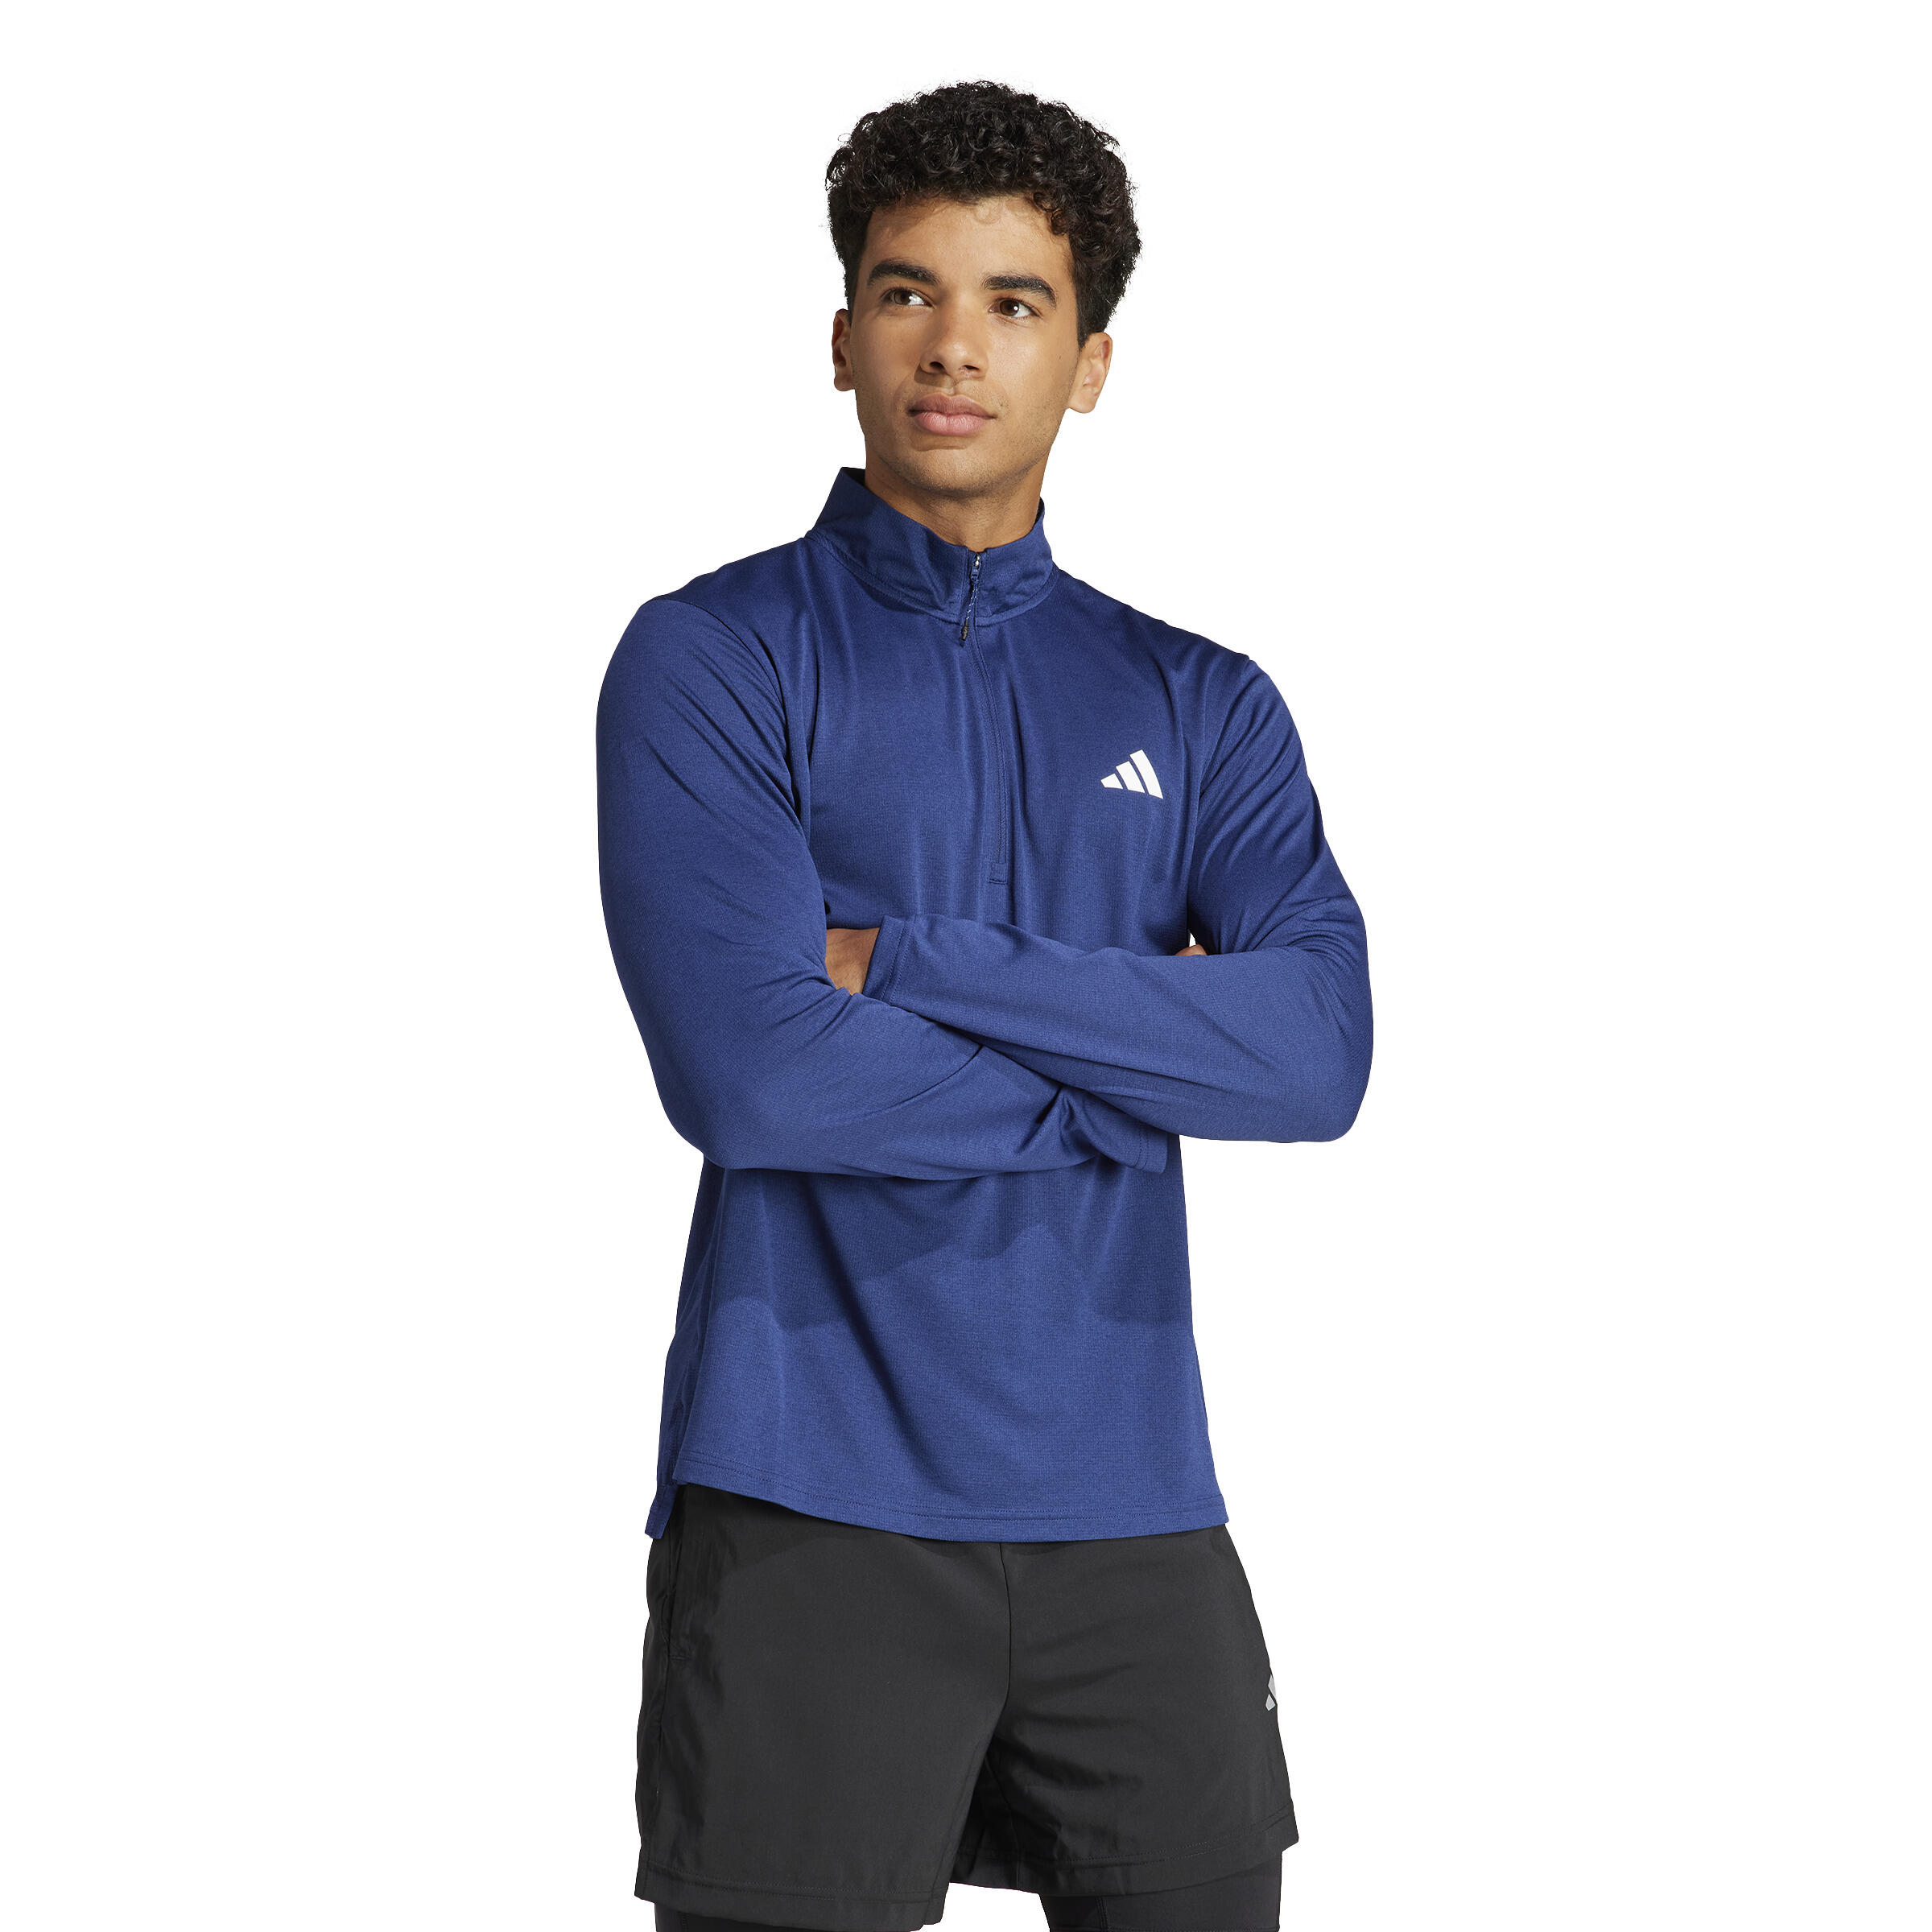 Adidas Mens Cardio Fitness Sweatshirt With Zip-up Collar - Blue